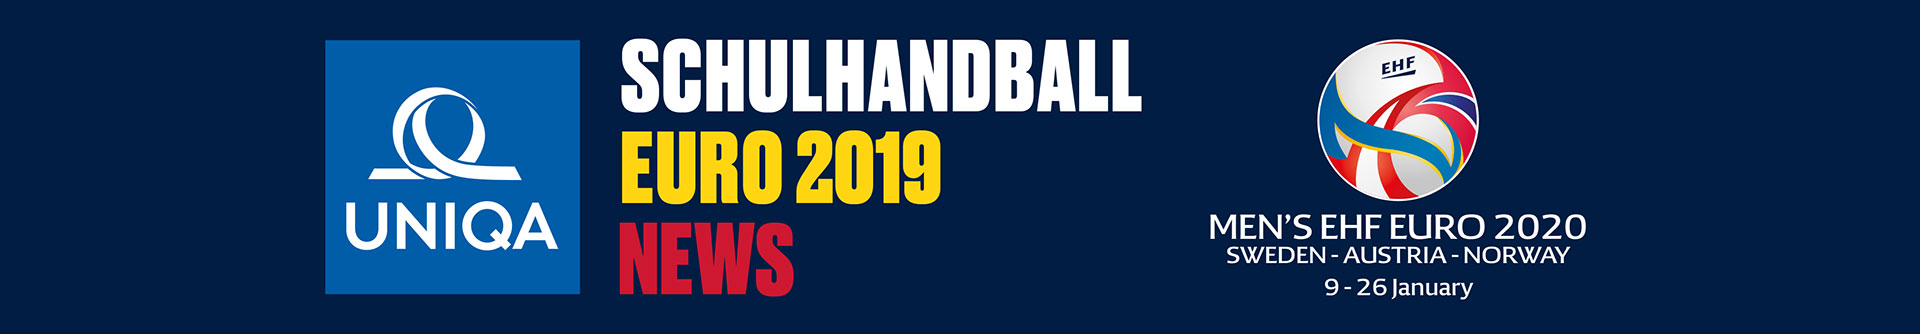 Schulhandball Euro 2019 News